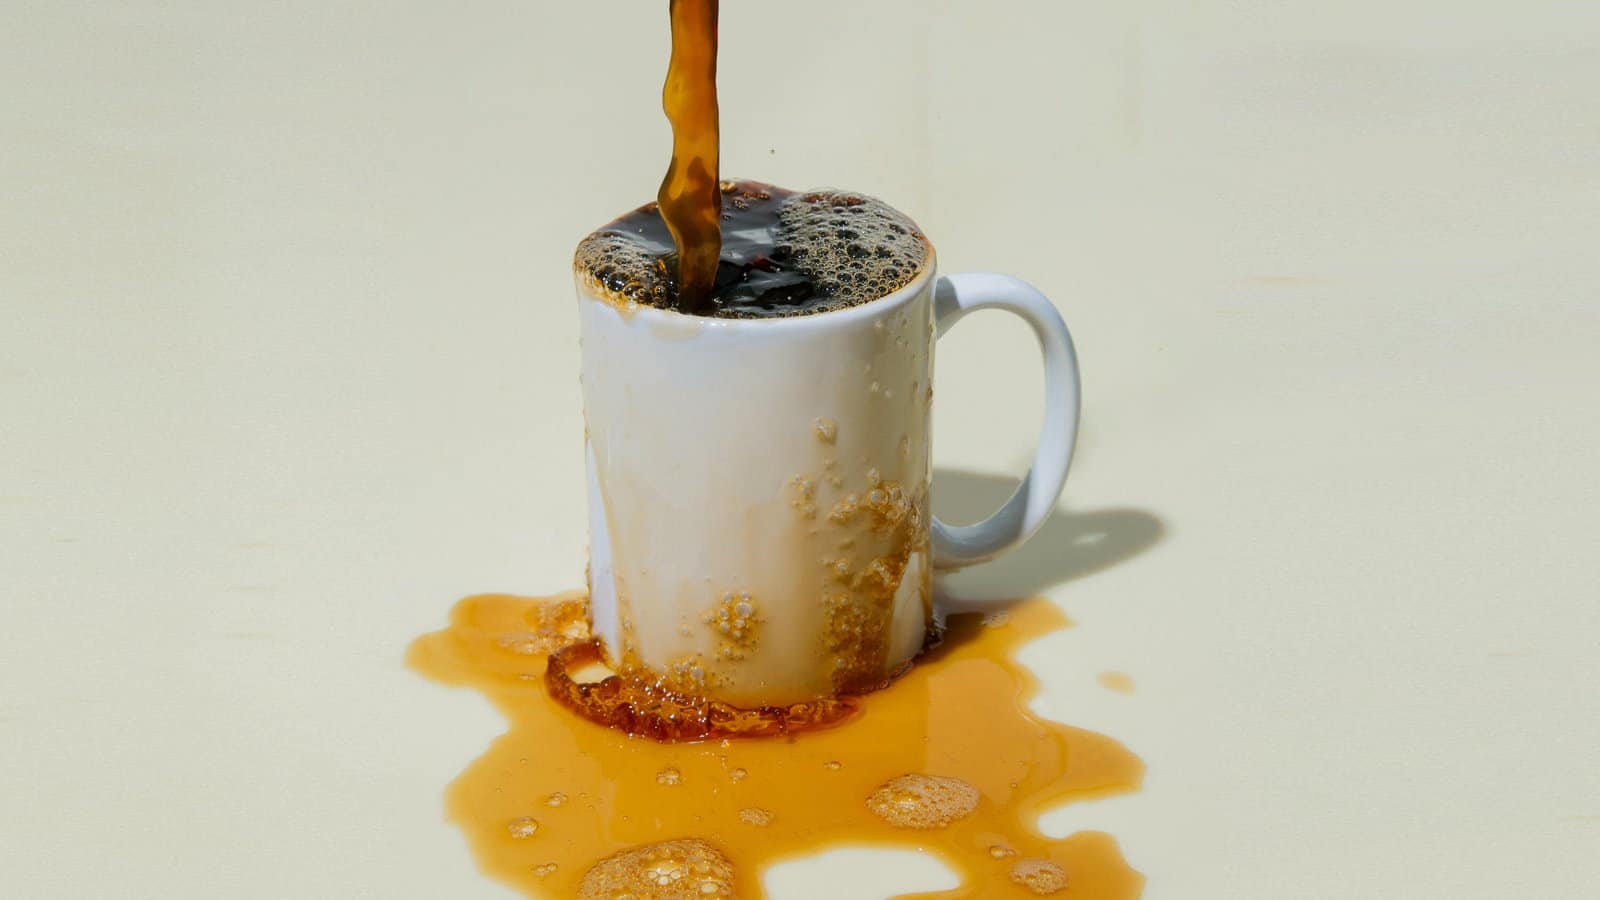 Health effects of drinking espresso
